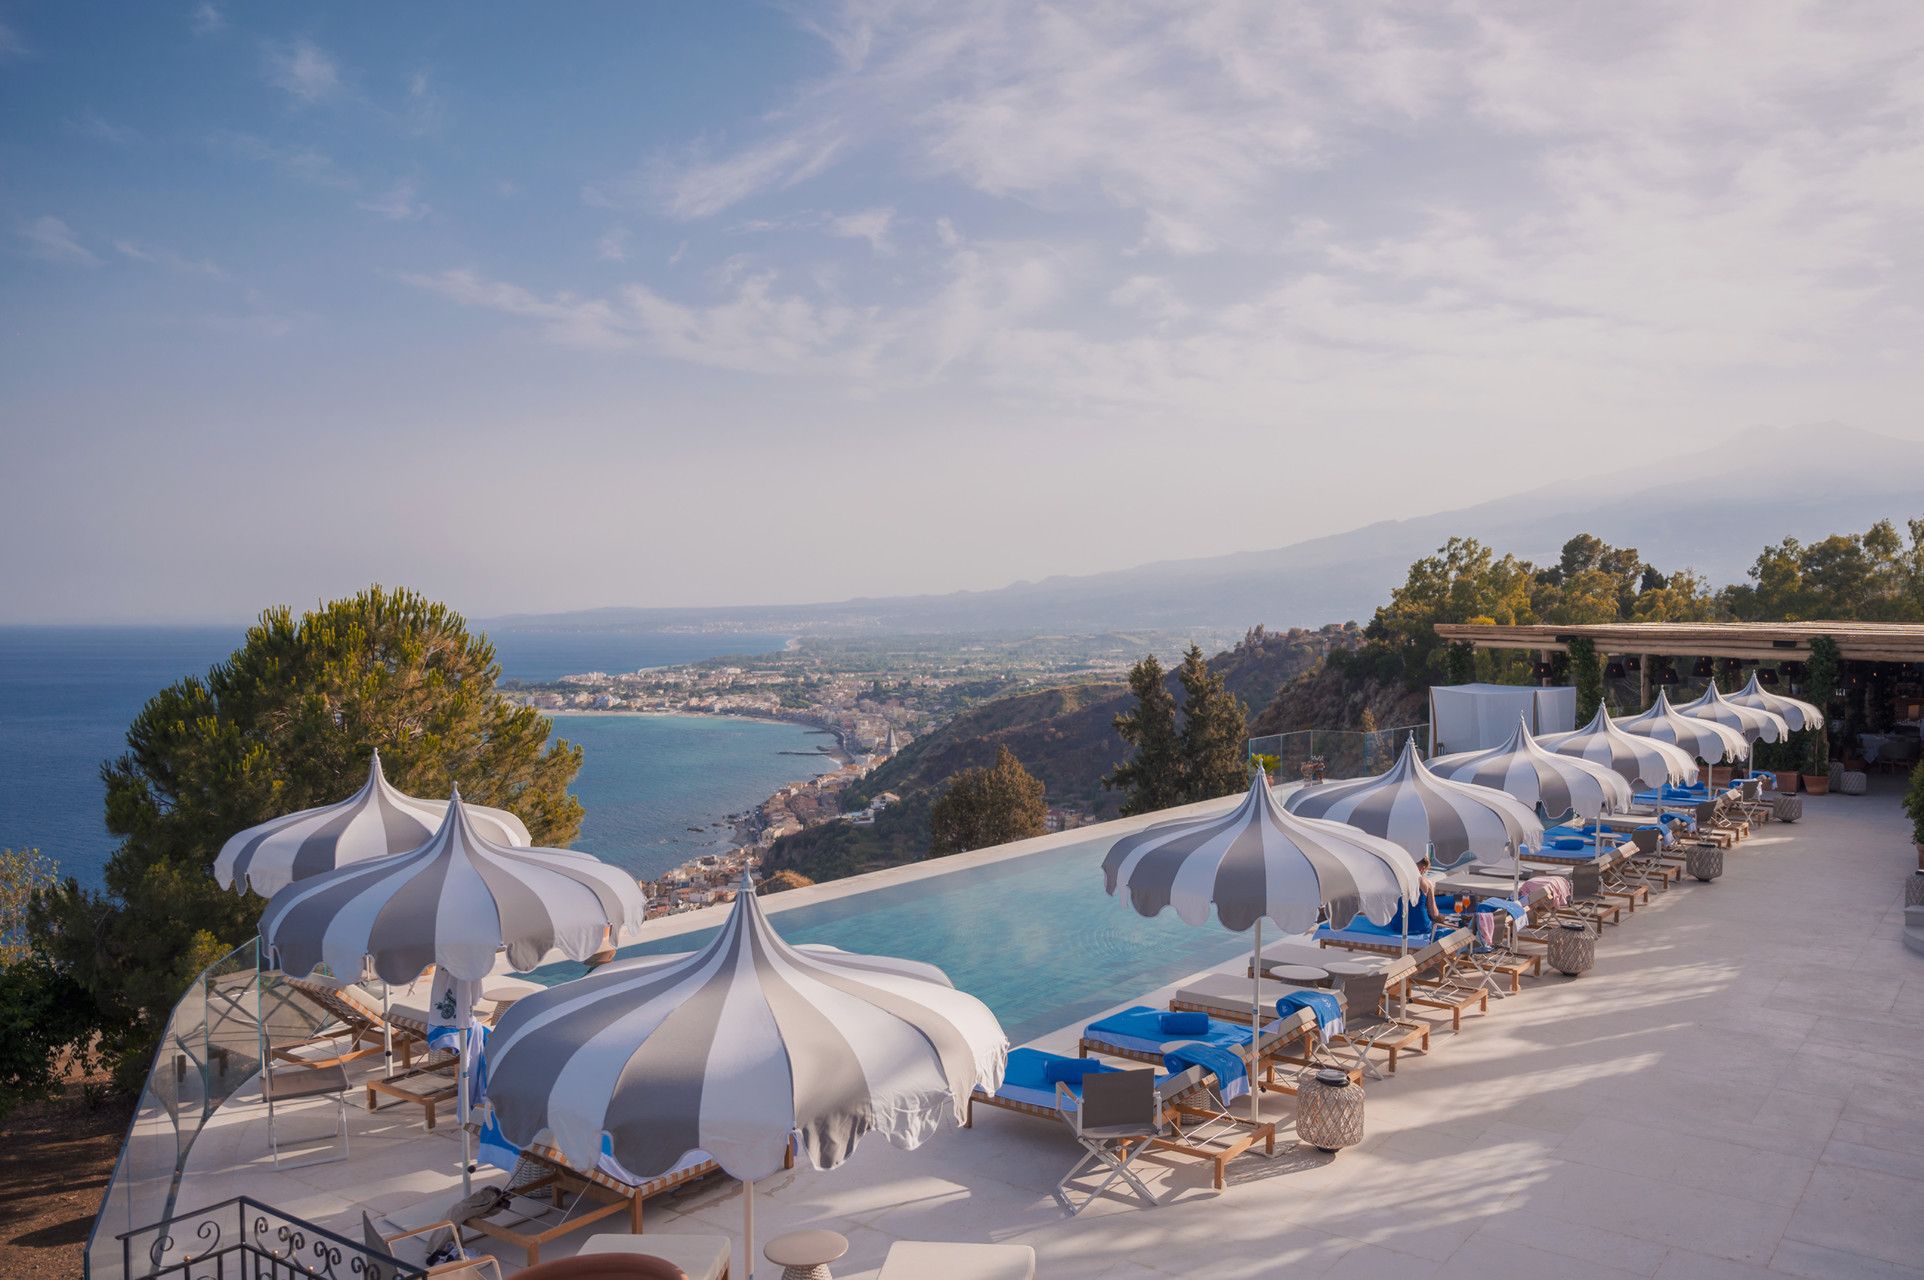 Grand Hotel Timeo, Luxury Hotel Overlooking Mount Etna